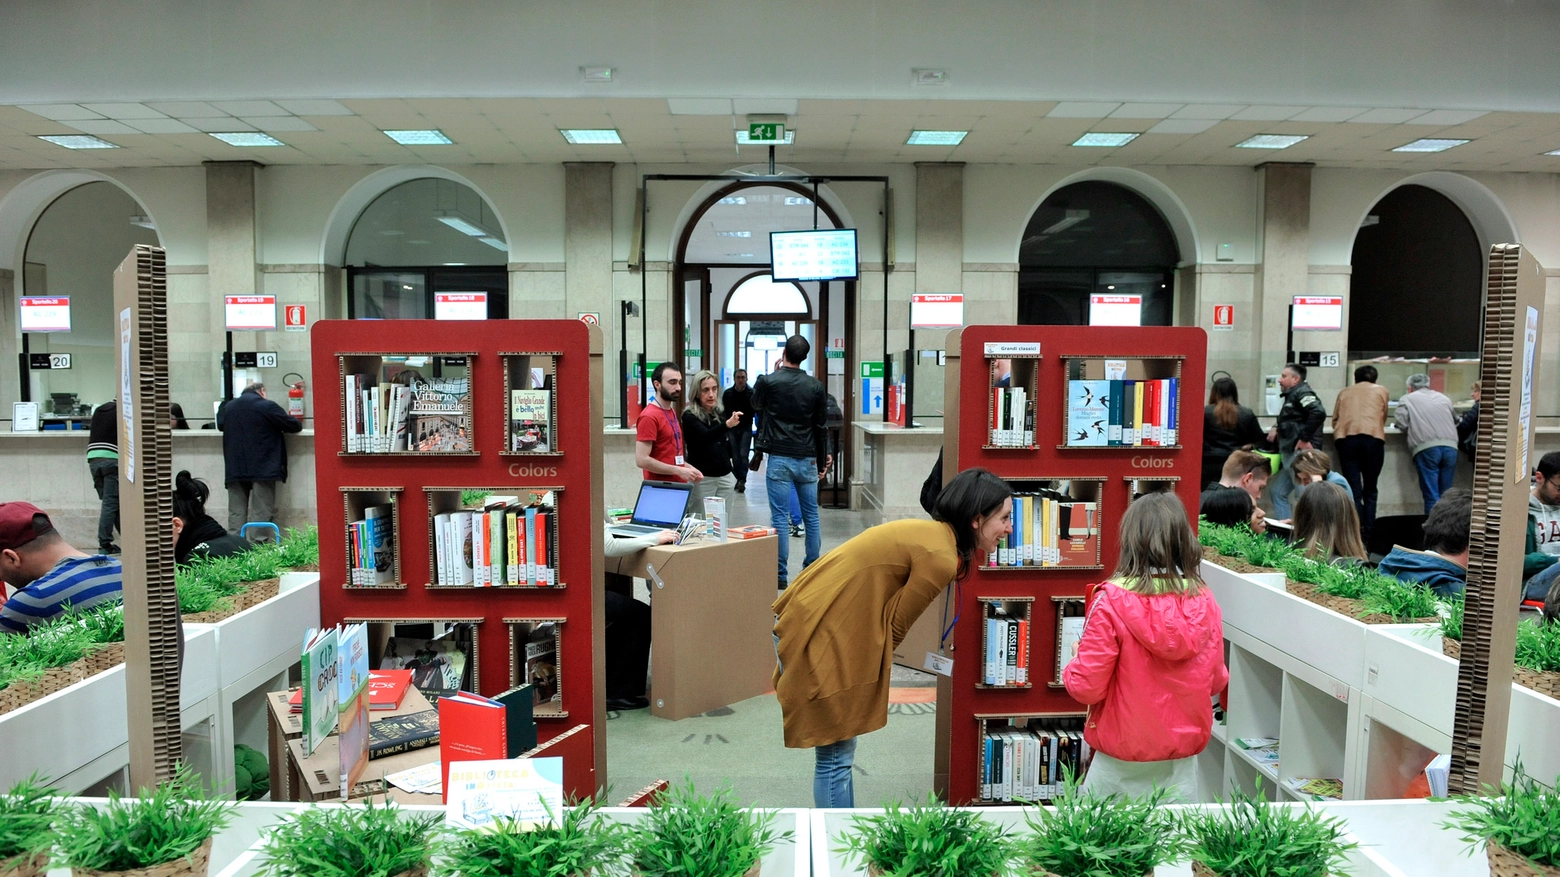 Biblioteca in Attesa all'Anagrafe di via Larga (Newpress)